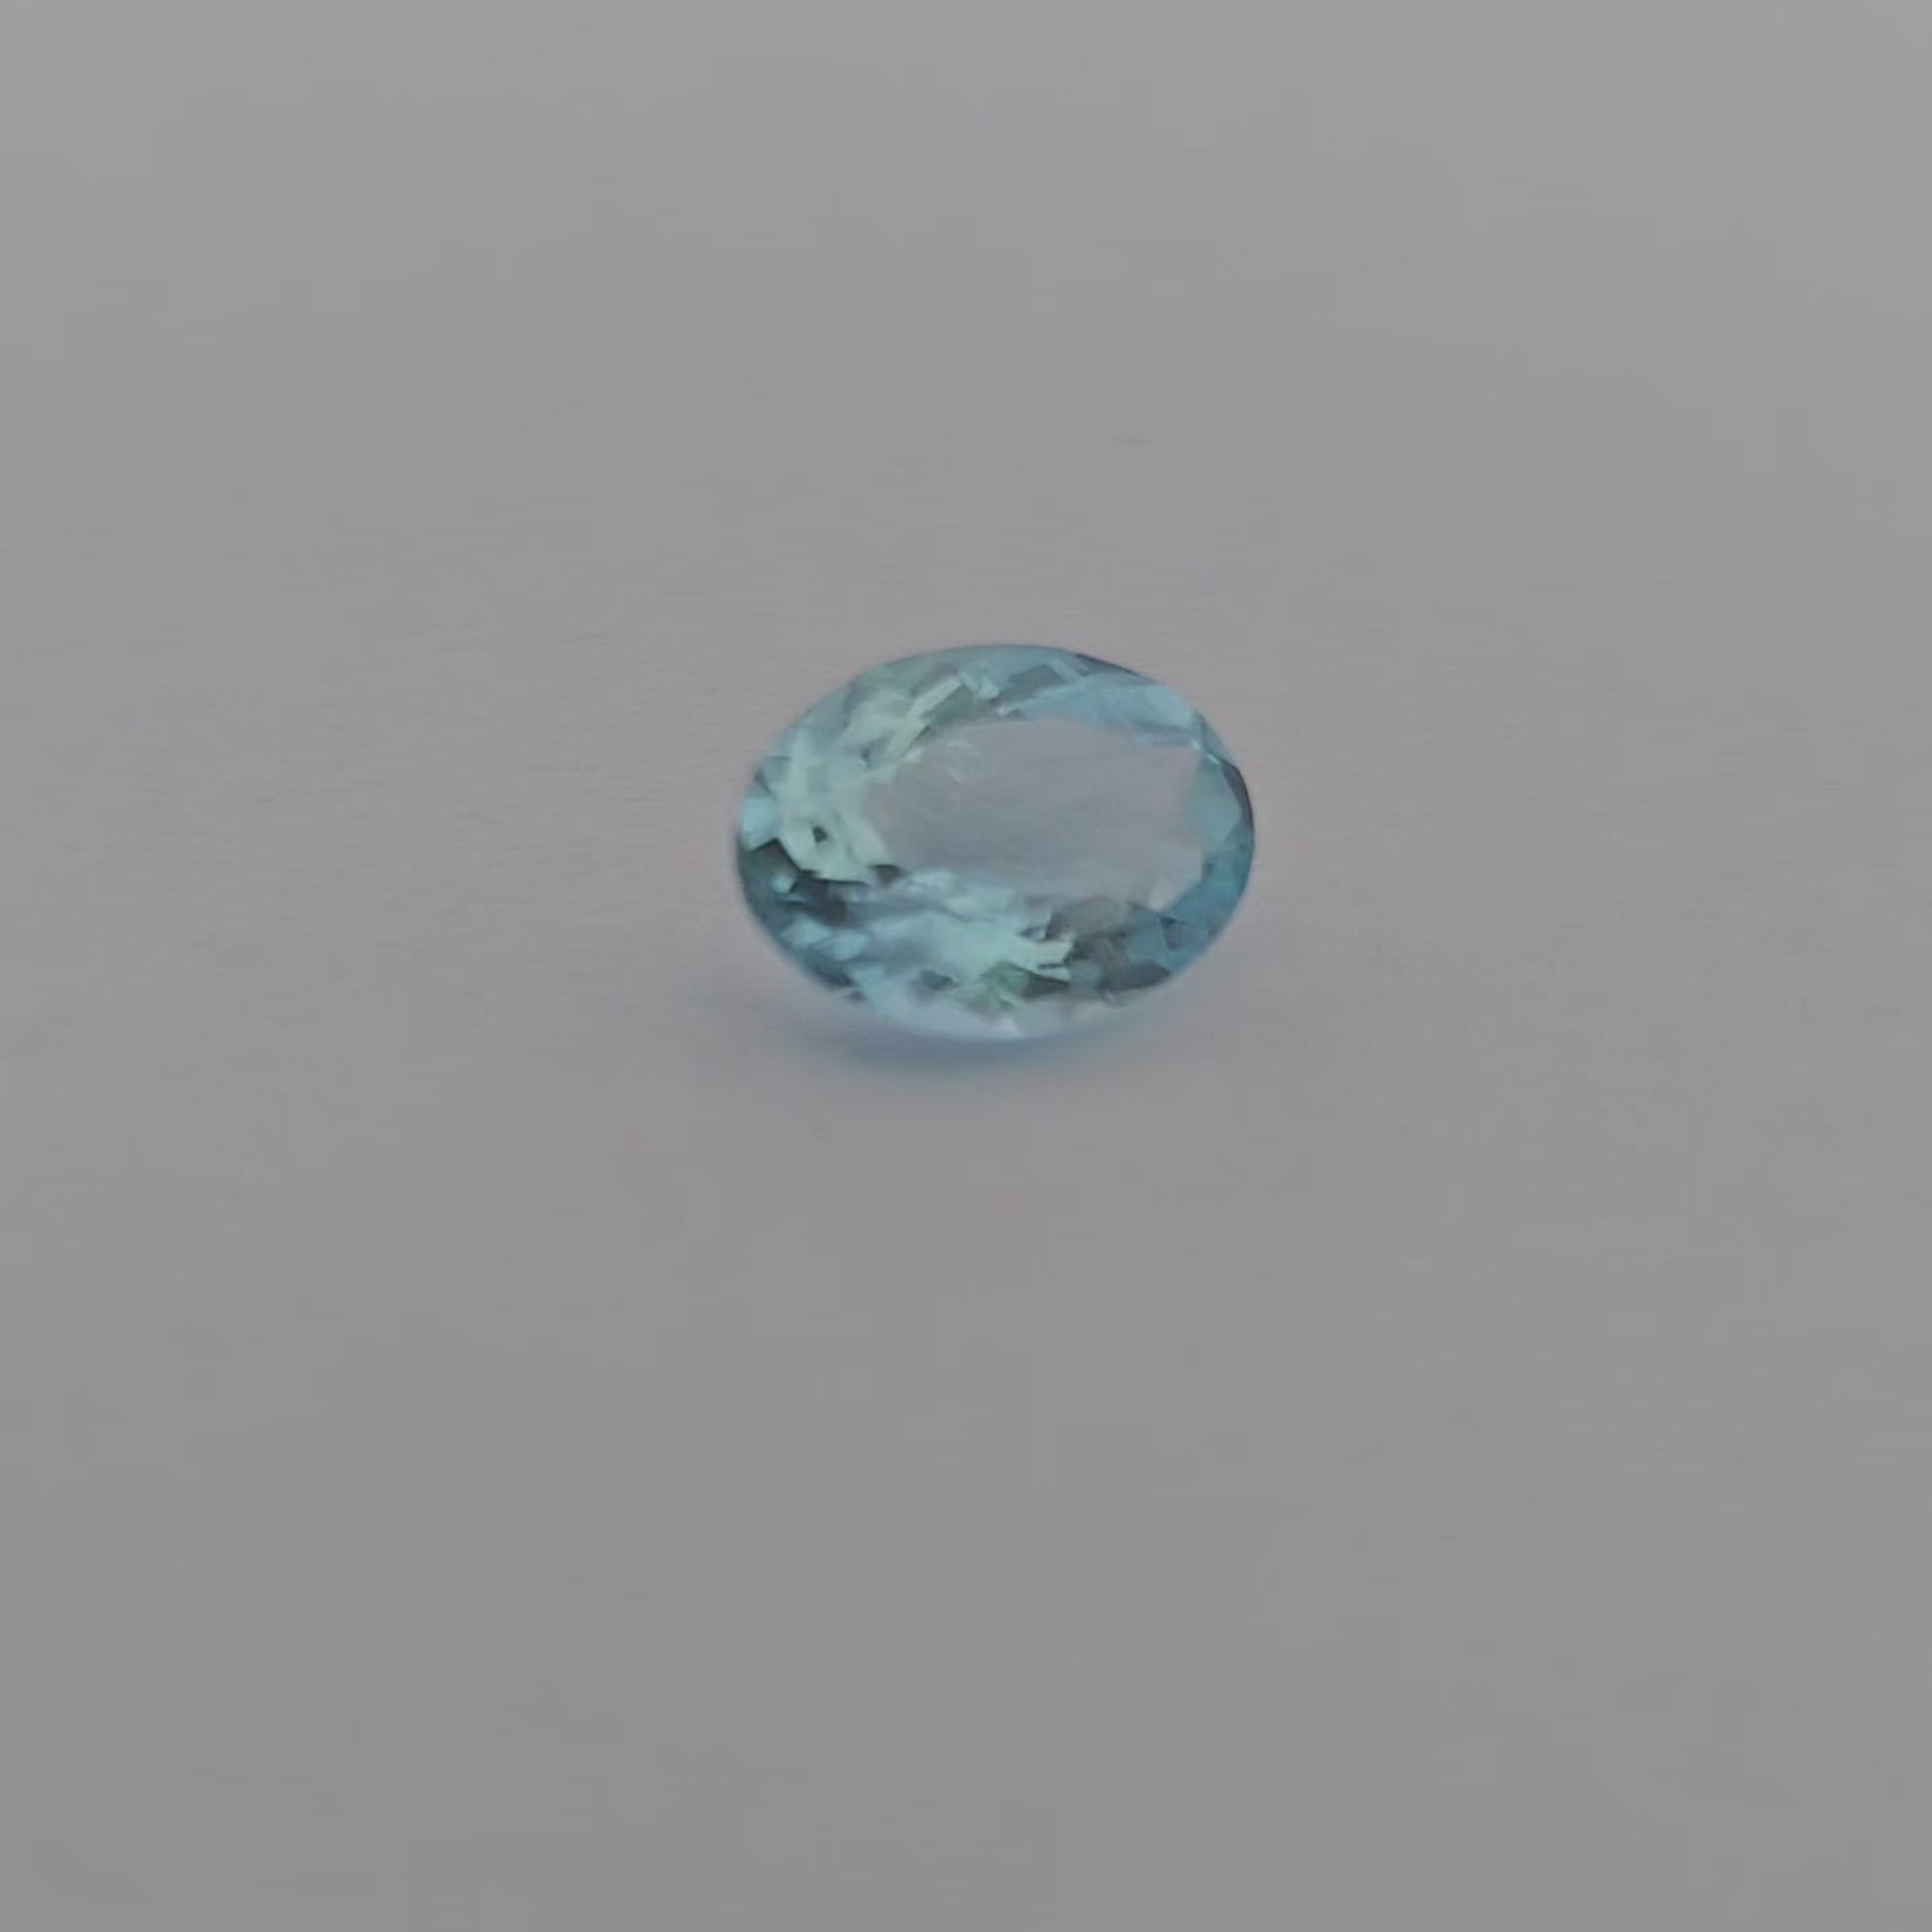 loose Natural Aquamarine Stone 1.13 Carats Oval Shape 8.3 x 6.3 mm